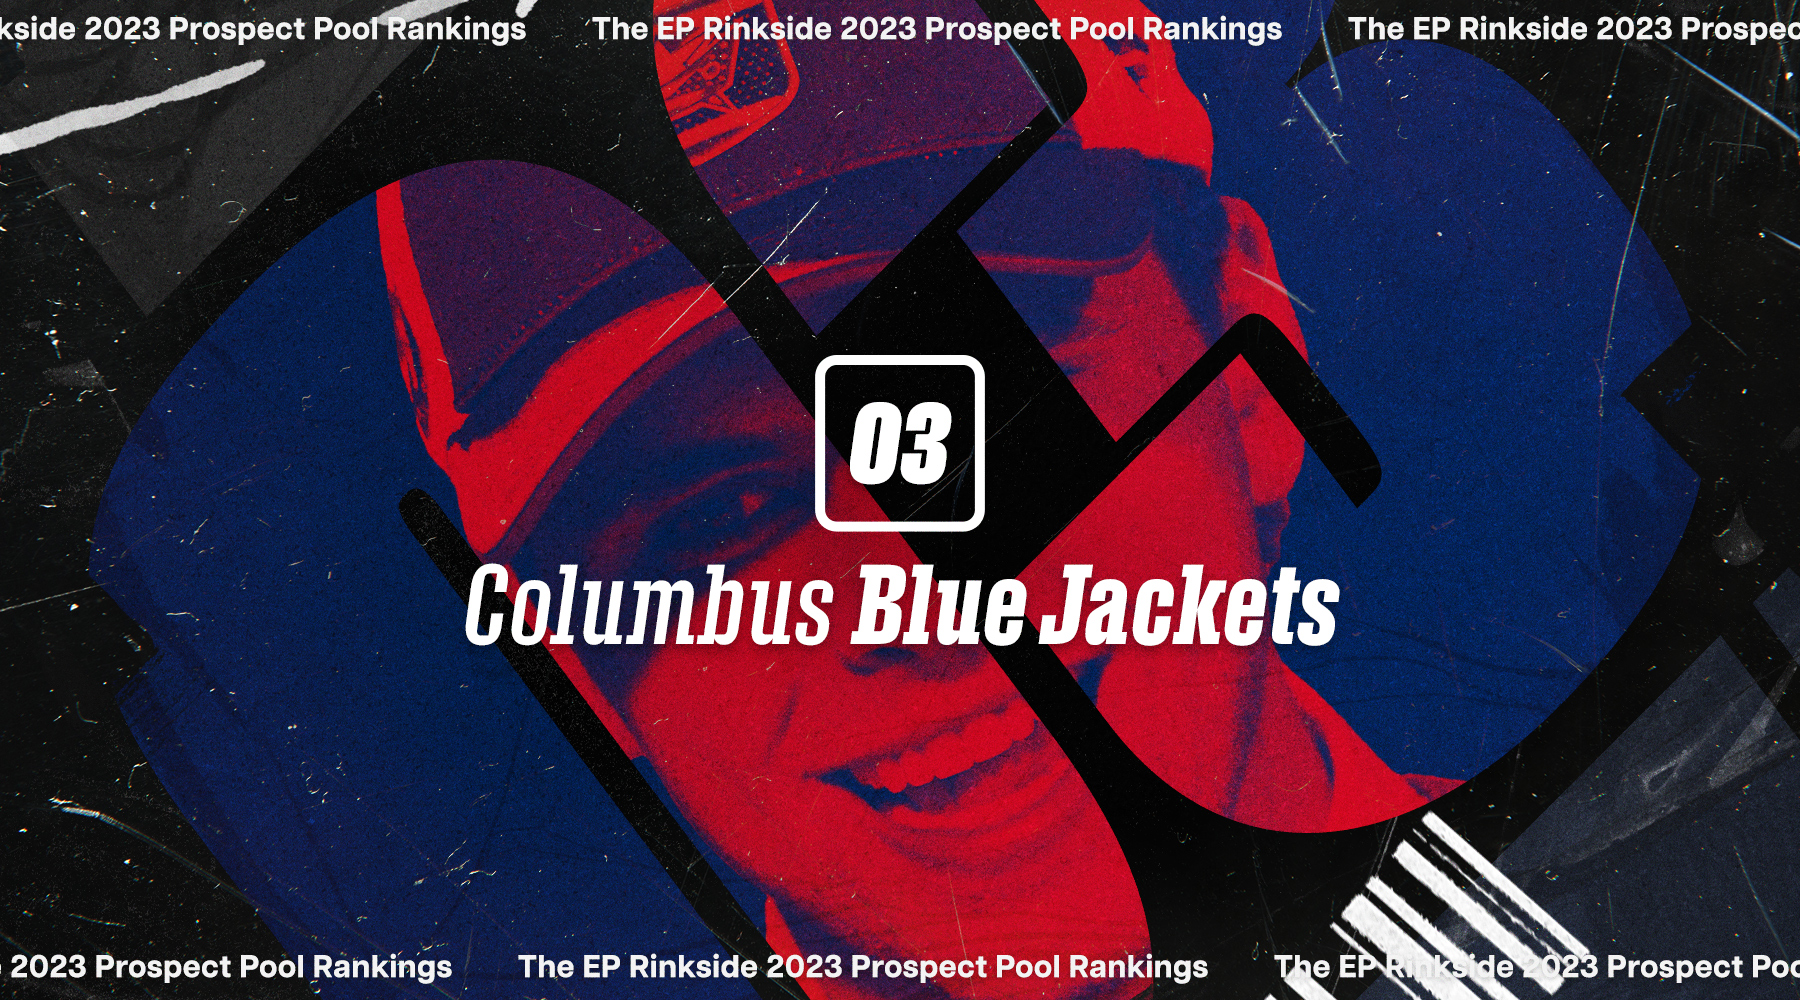 EP Rinkside 2023 NHL Prospect Pool Rankings: No. 3-ranked Columbus Blue Jackets